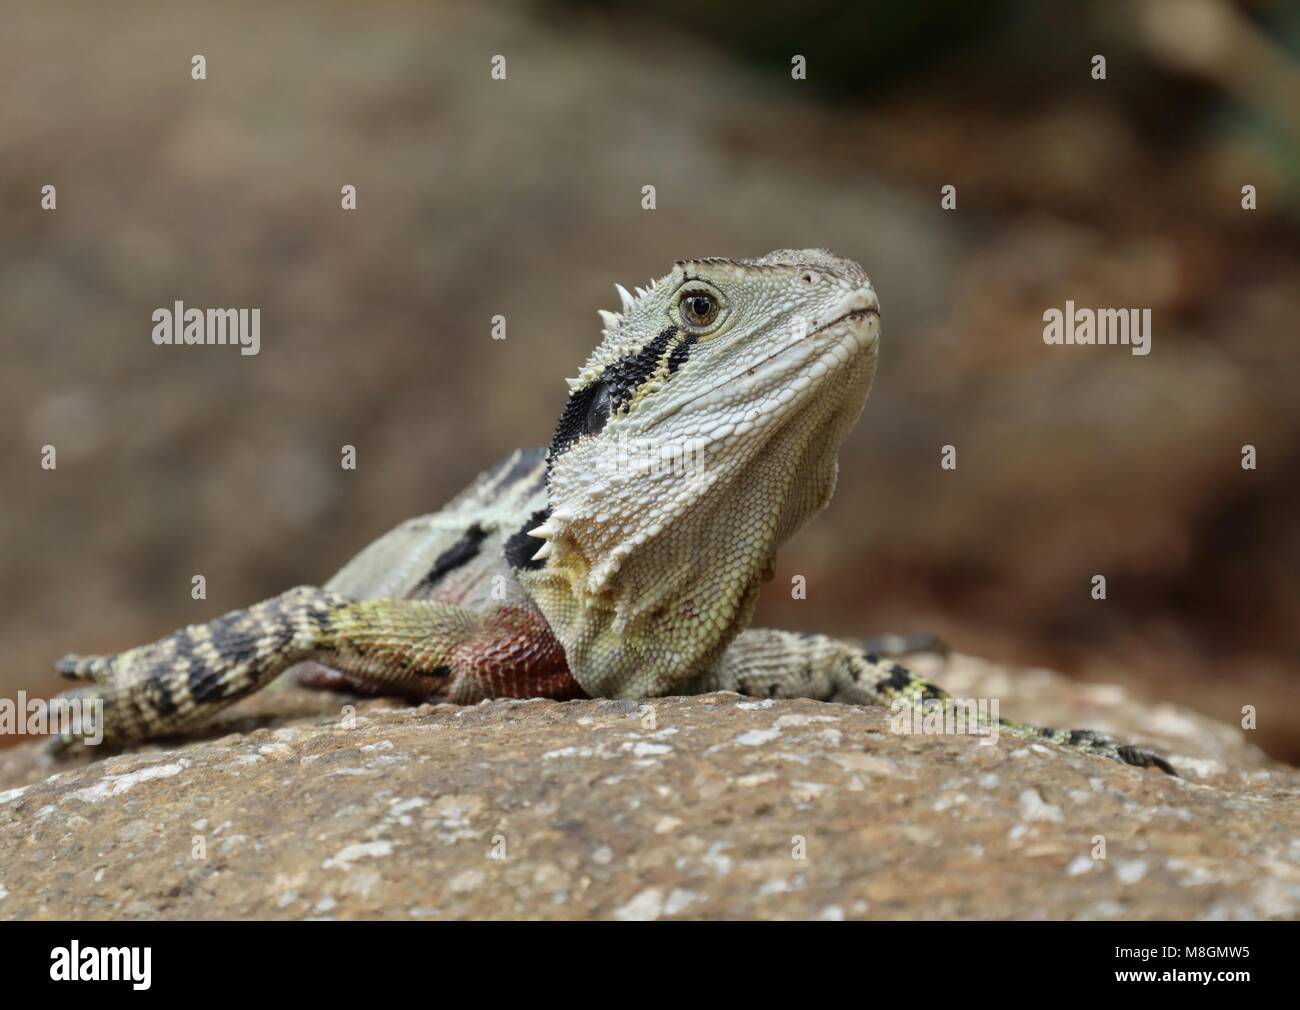 Head on shot of an Australian Water Dragon lizard taken in the Brisbane Botanical Gardens, Australia. Stock Photo